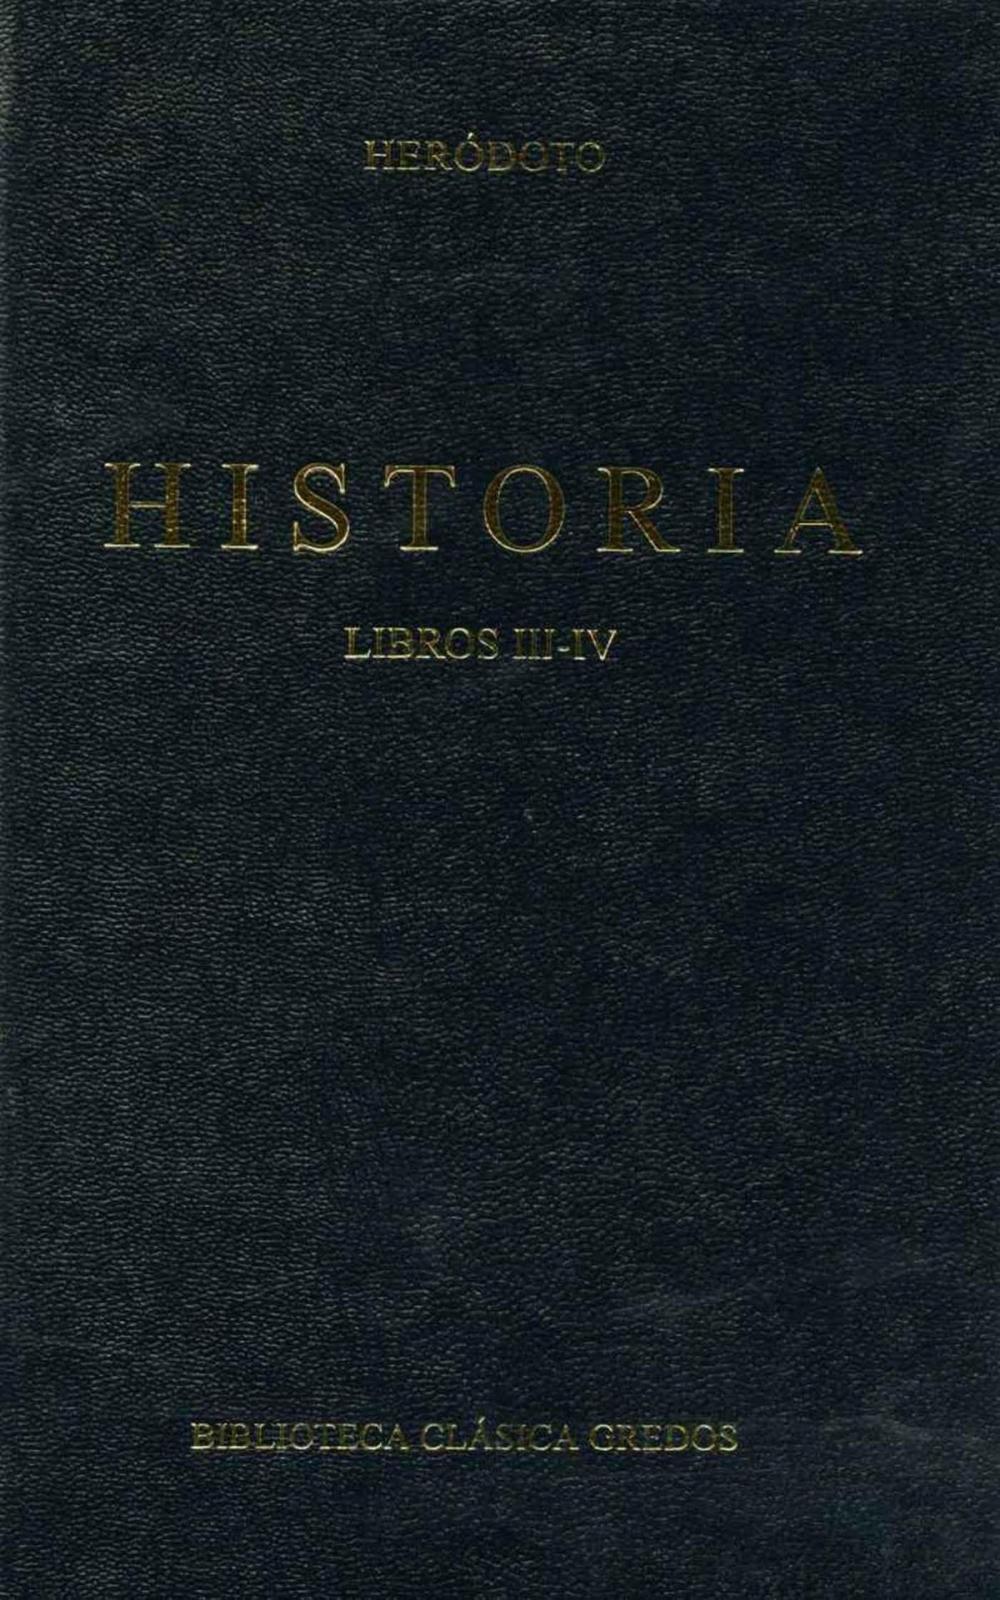 Big bigCover of Historia. Libros III-IV